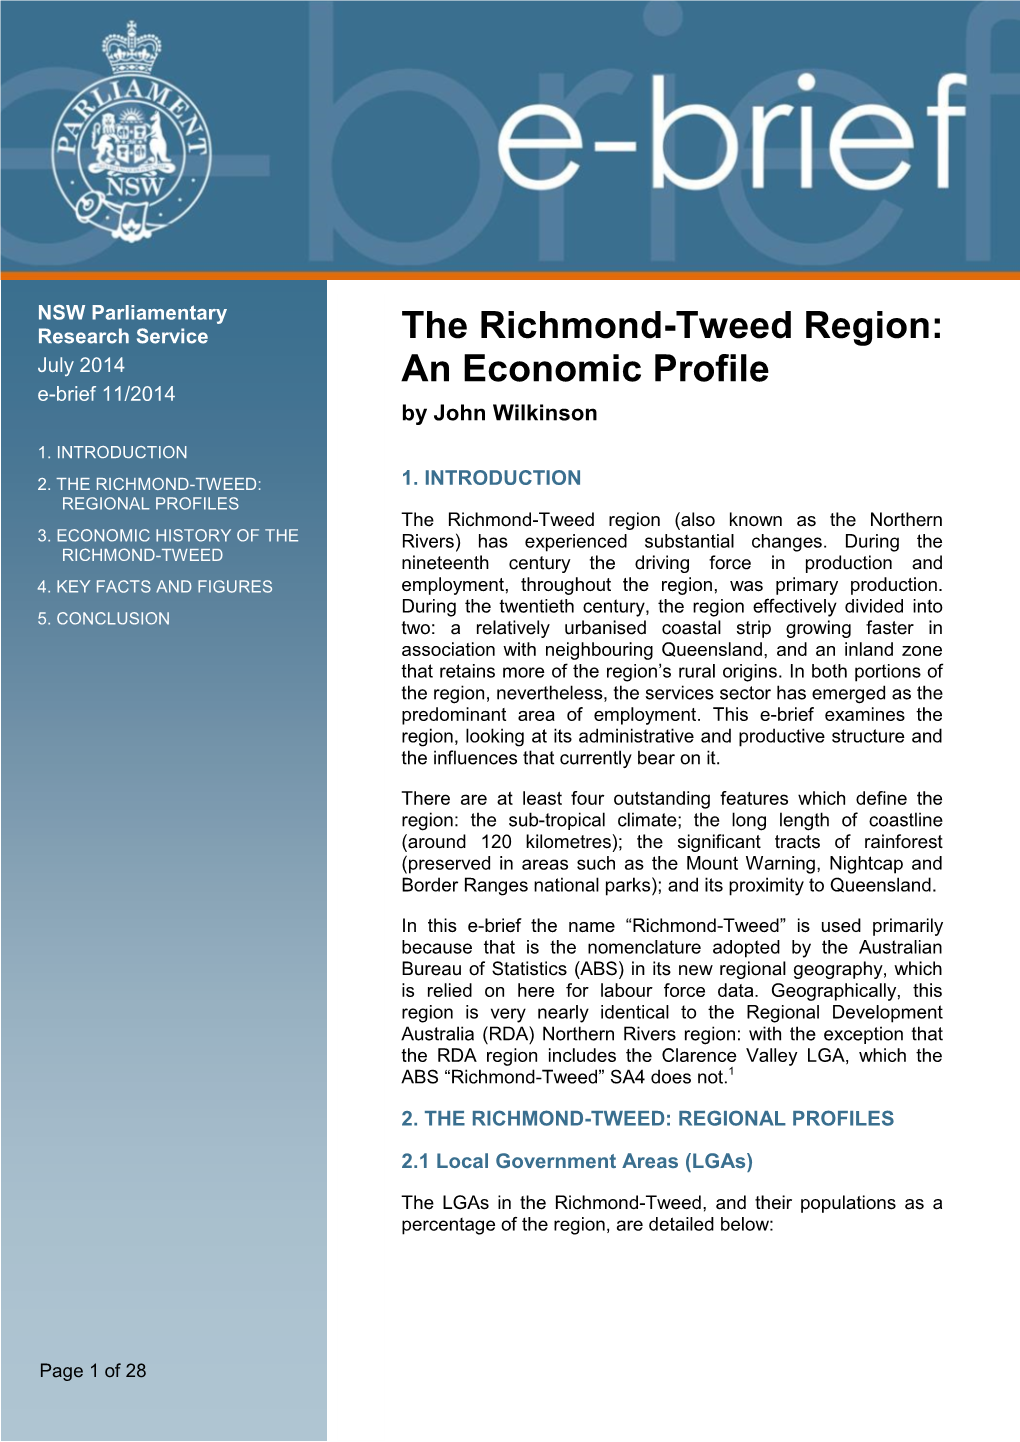 The Richmond-Tweed Region: an Economic Profile